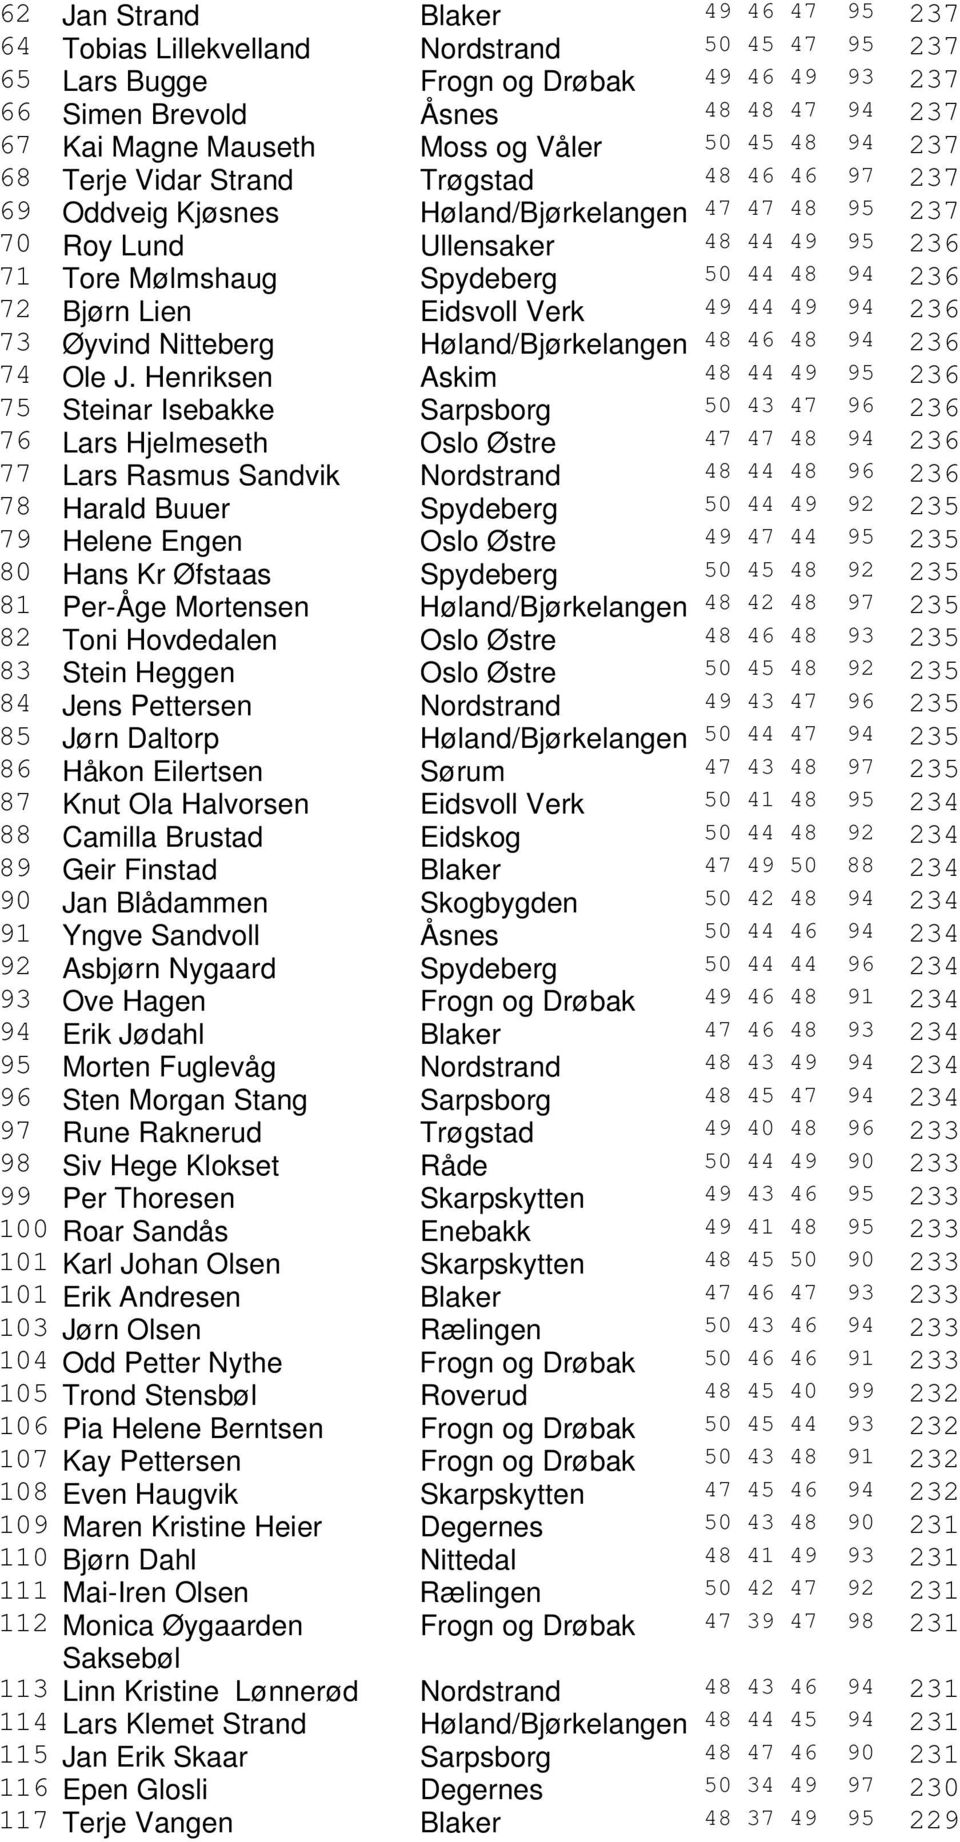 48 94 236 72 Bjørn Lien Eidsvoll Verk 49 44 49 94 236 73 Øyvind Nitteberg Høland/Bjørkelangen 48 46 48 94 236 74 Ole J.